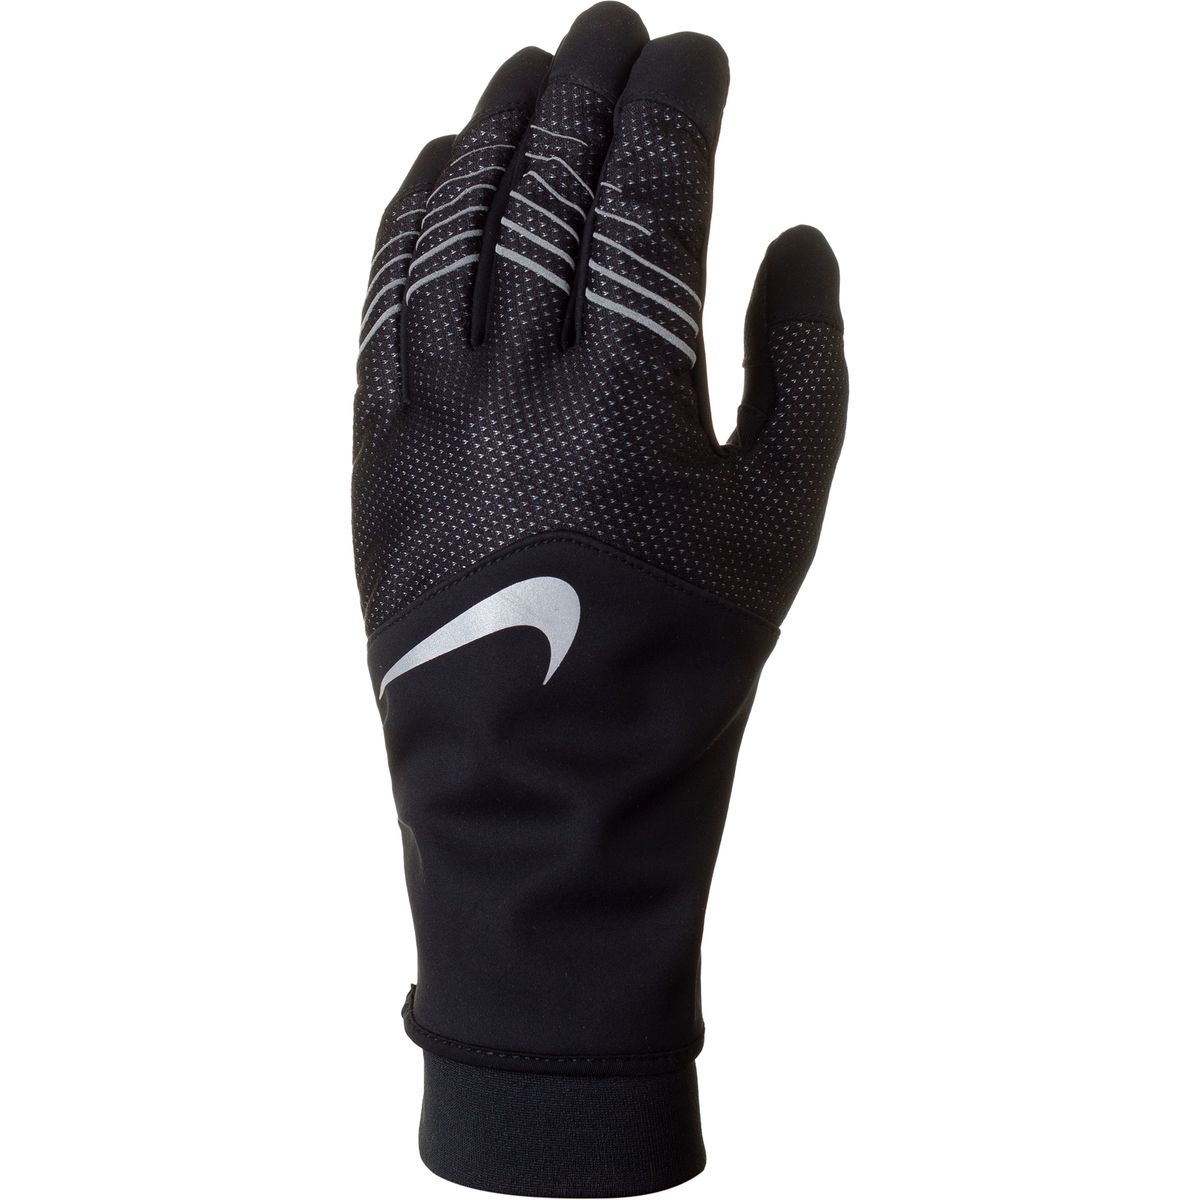 Nike Storm Fit Hybrid Run Glove - Men's Black/Black/Silver, 